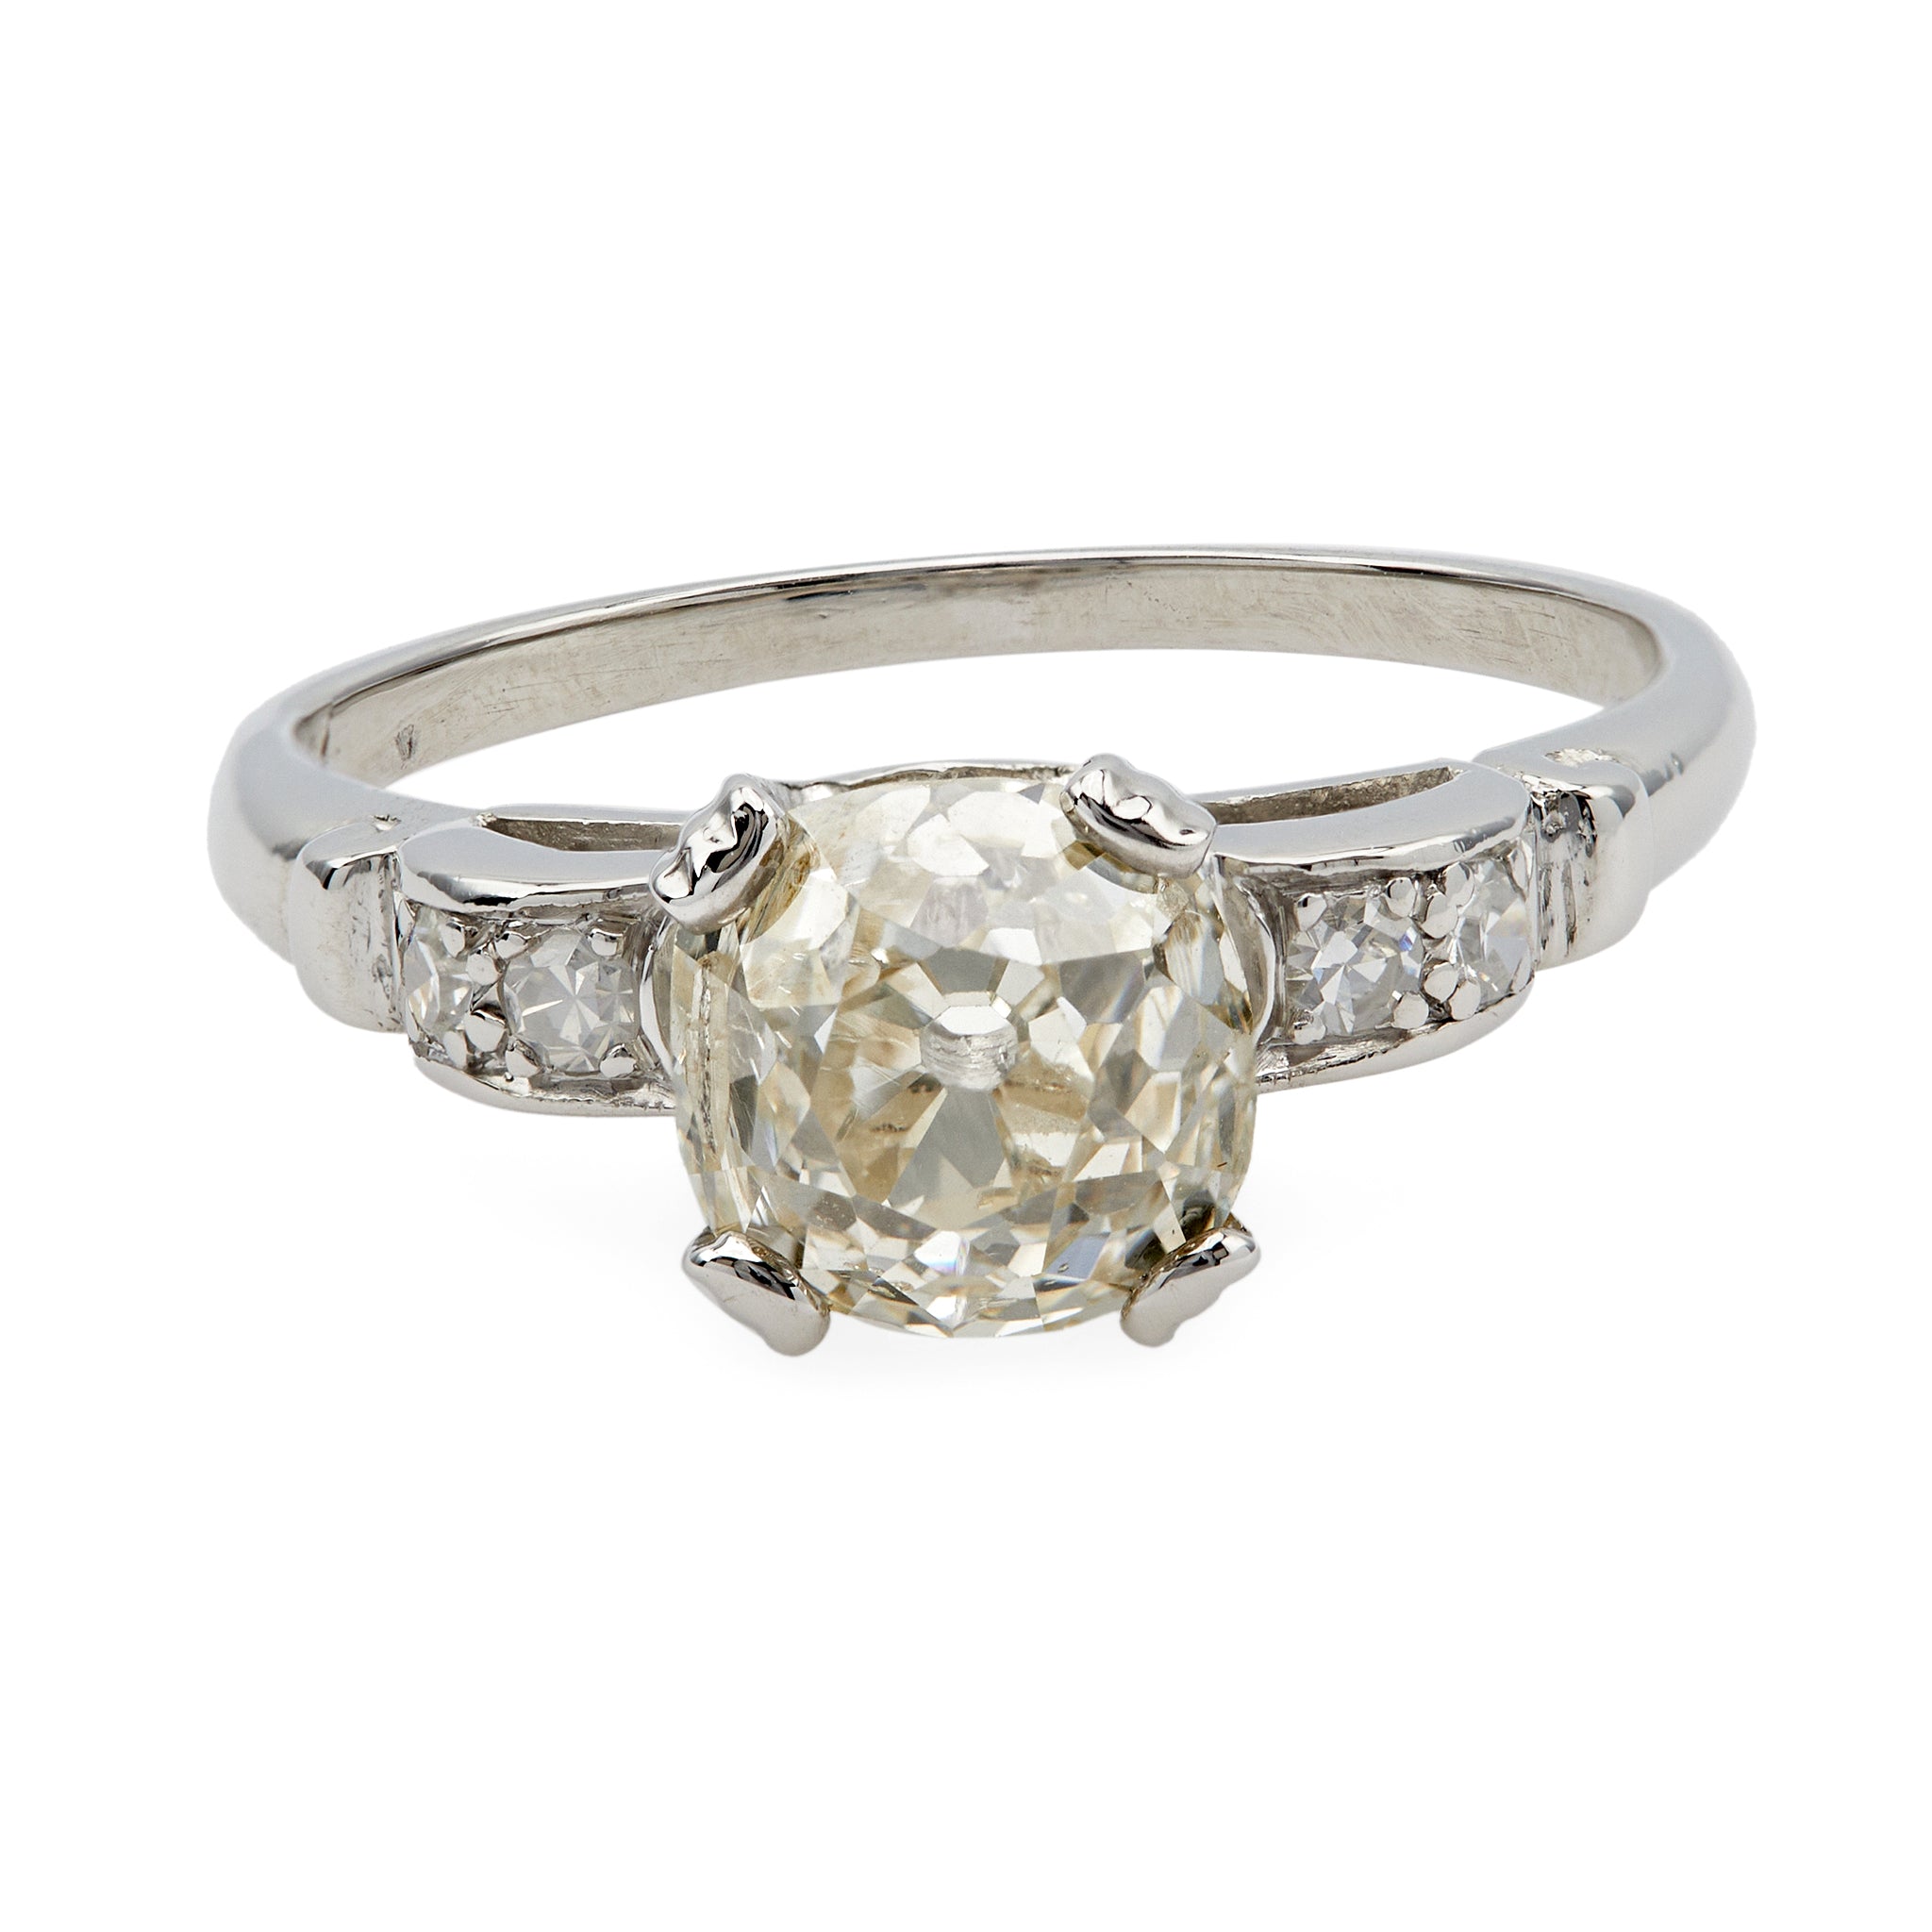 Art Deco GIA 1.88 Old Mine Cut Diamond Platinum Ring Rings Jack Weir & Sons   